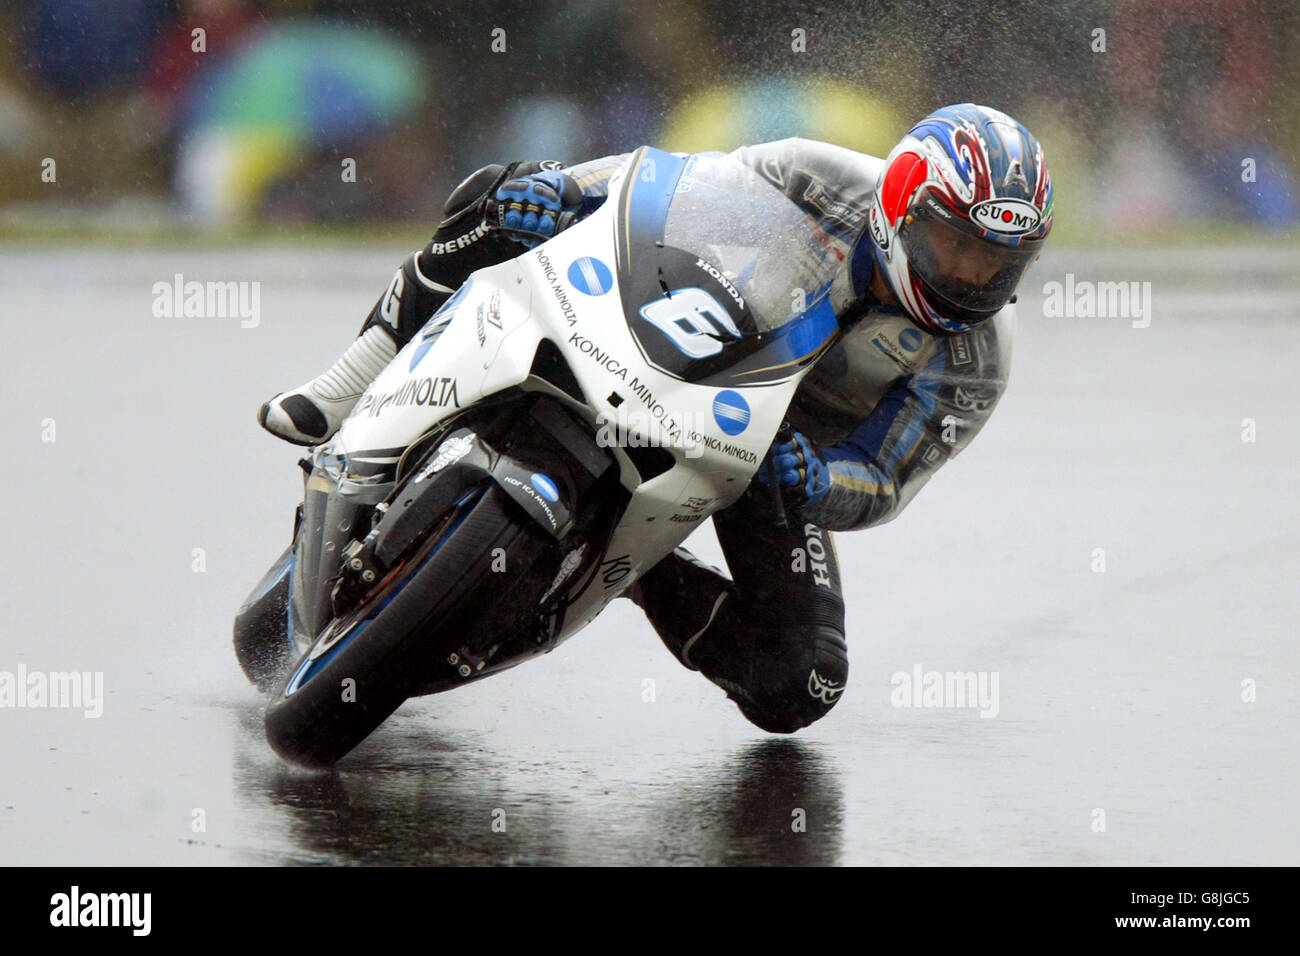 Motorcycling - British Grand Prix - Moto GP - Race - Donnington Park. Makoto Tamada, Konica Minolta Honda Stock Photo